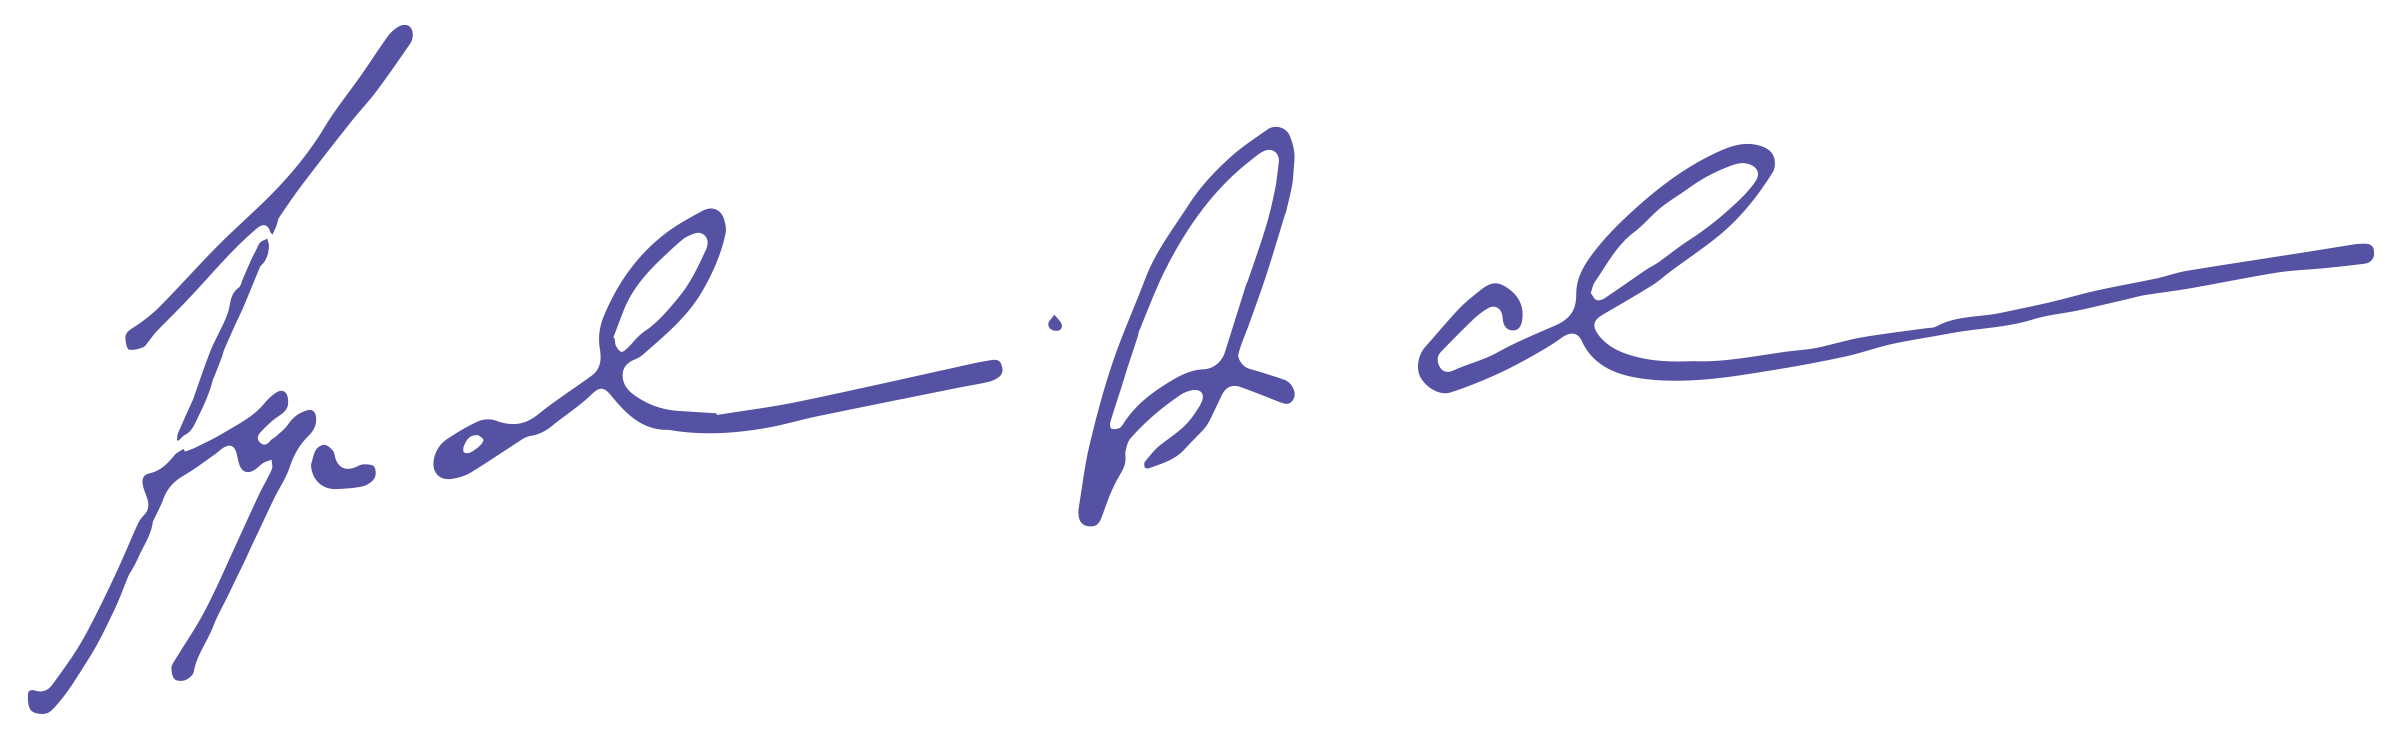 Lynden Archer's signature